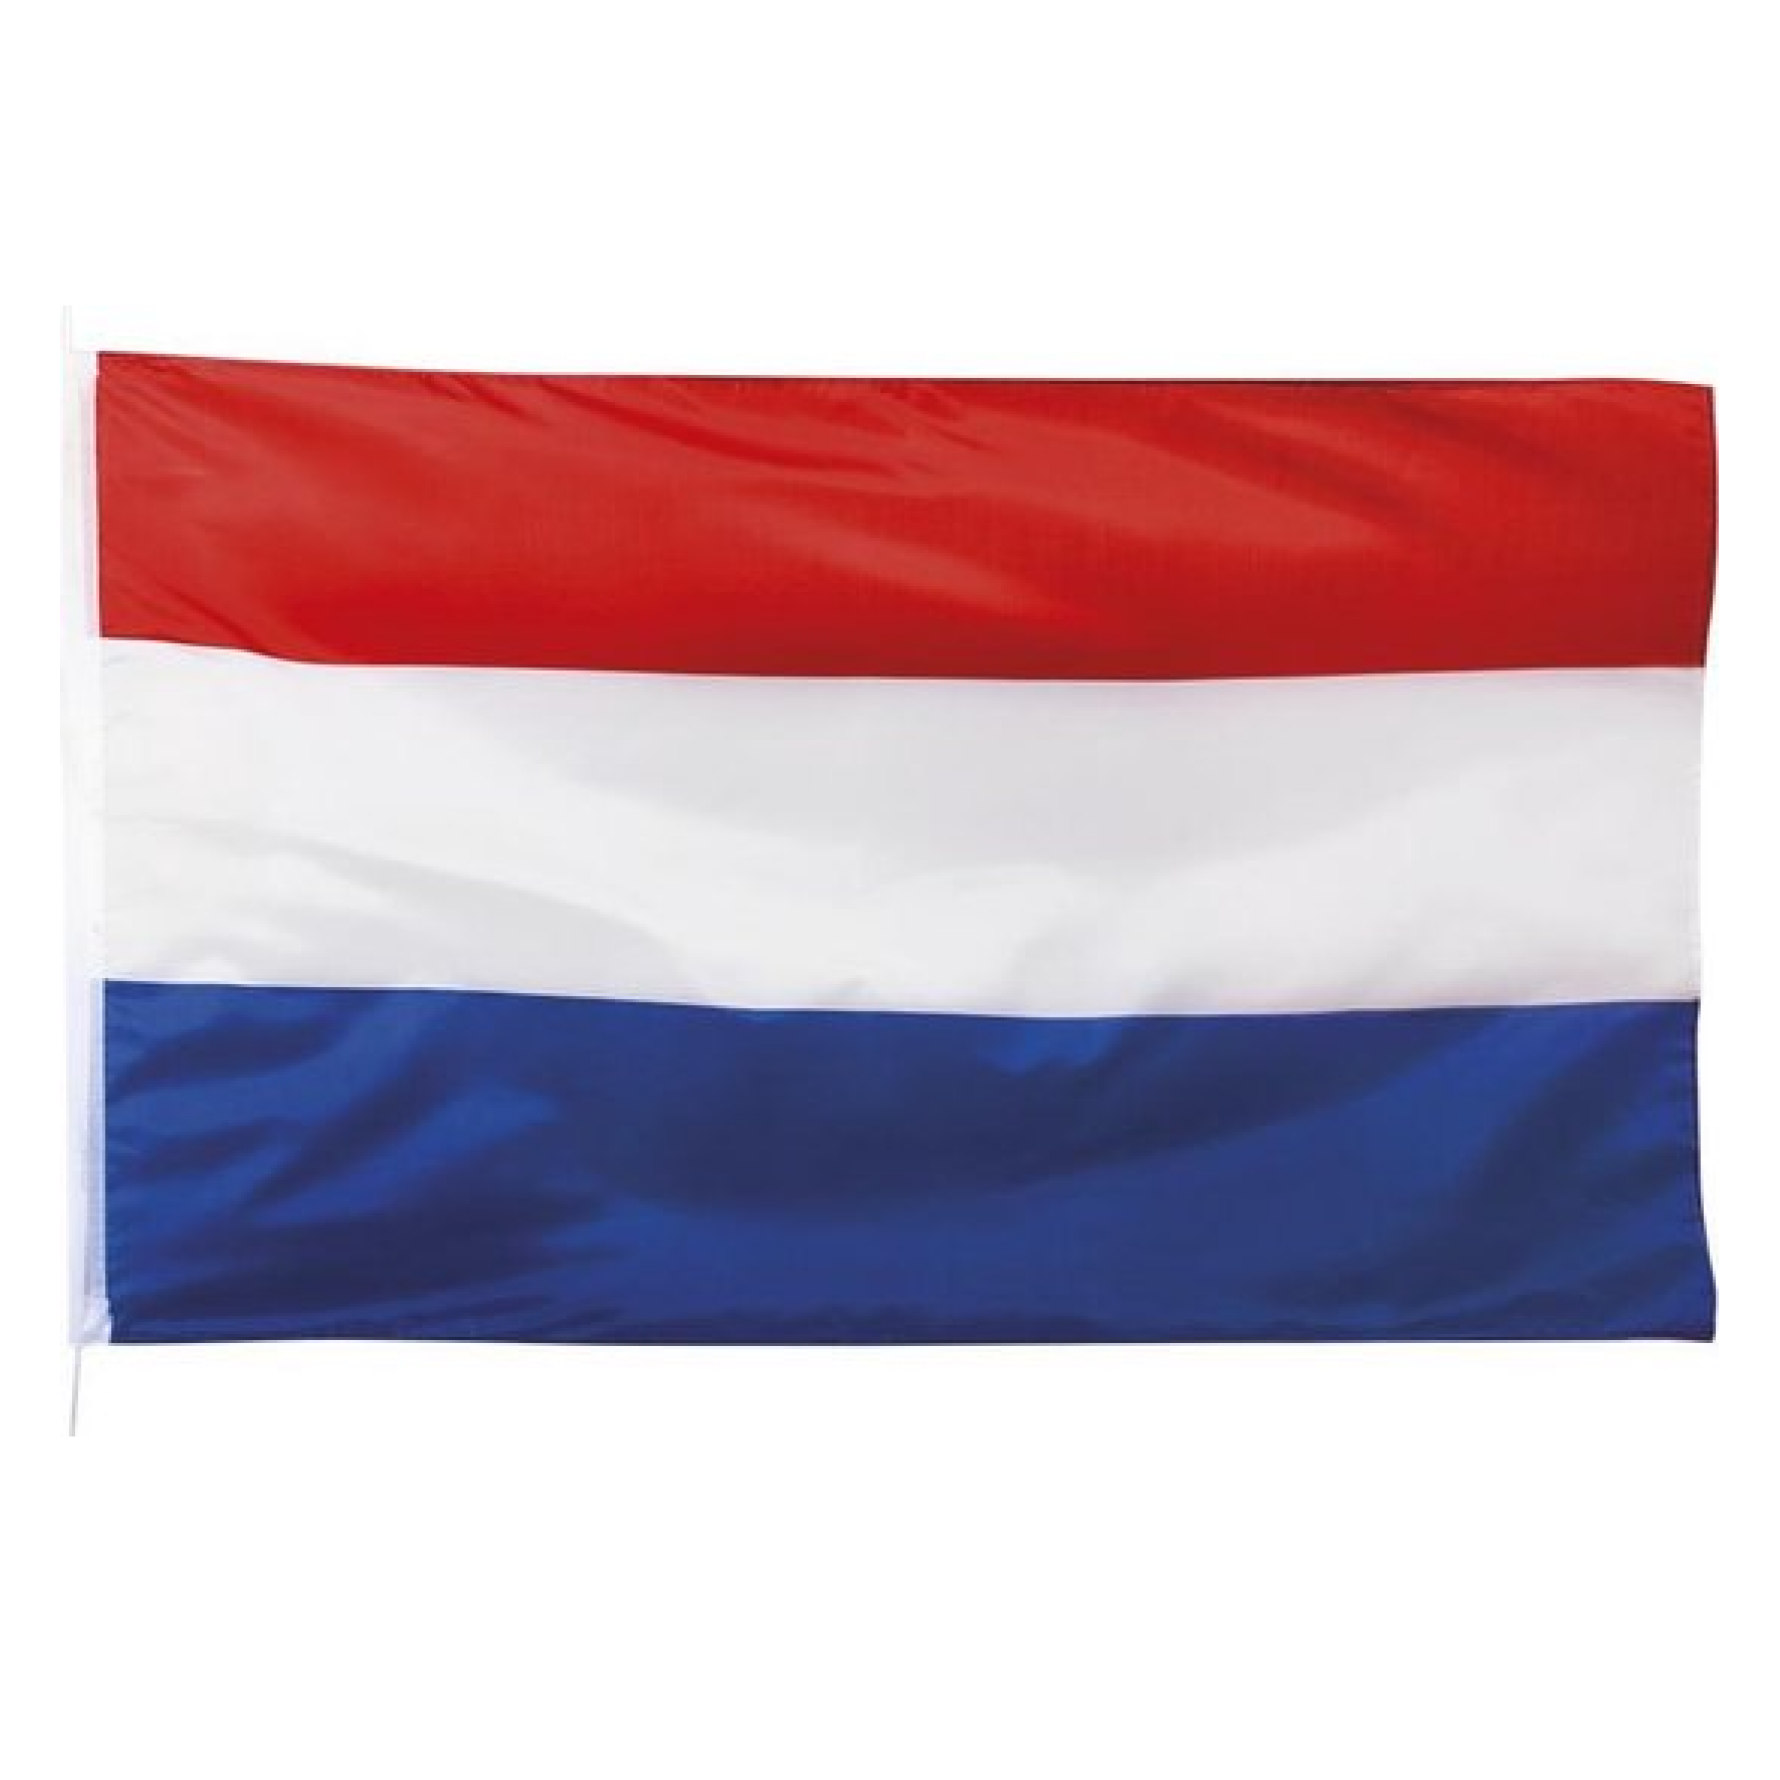 eiwit capsule Mus Vlag - Nederland - Rood wit blauw - 90x150cm - 1234feest.nl